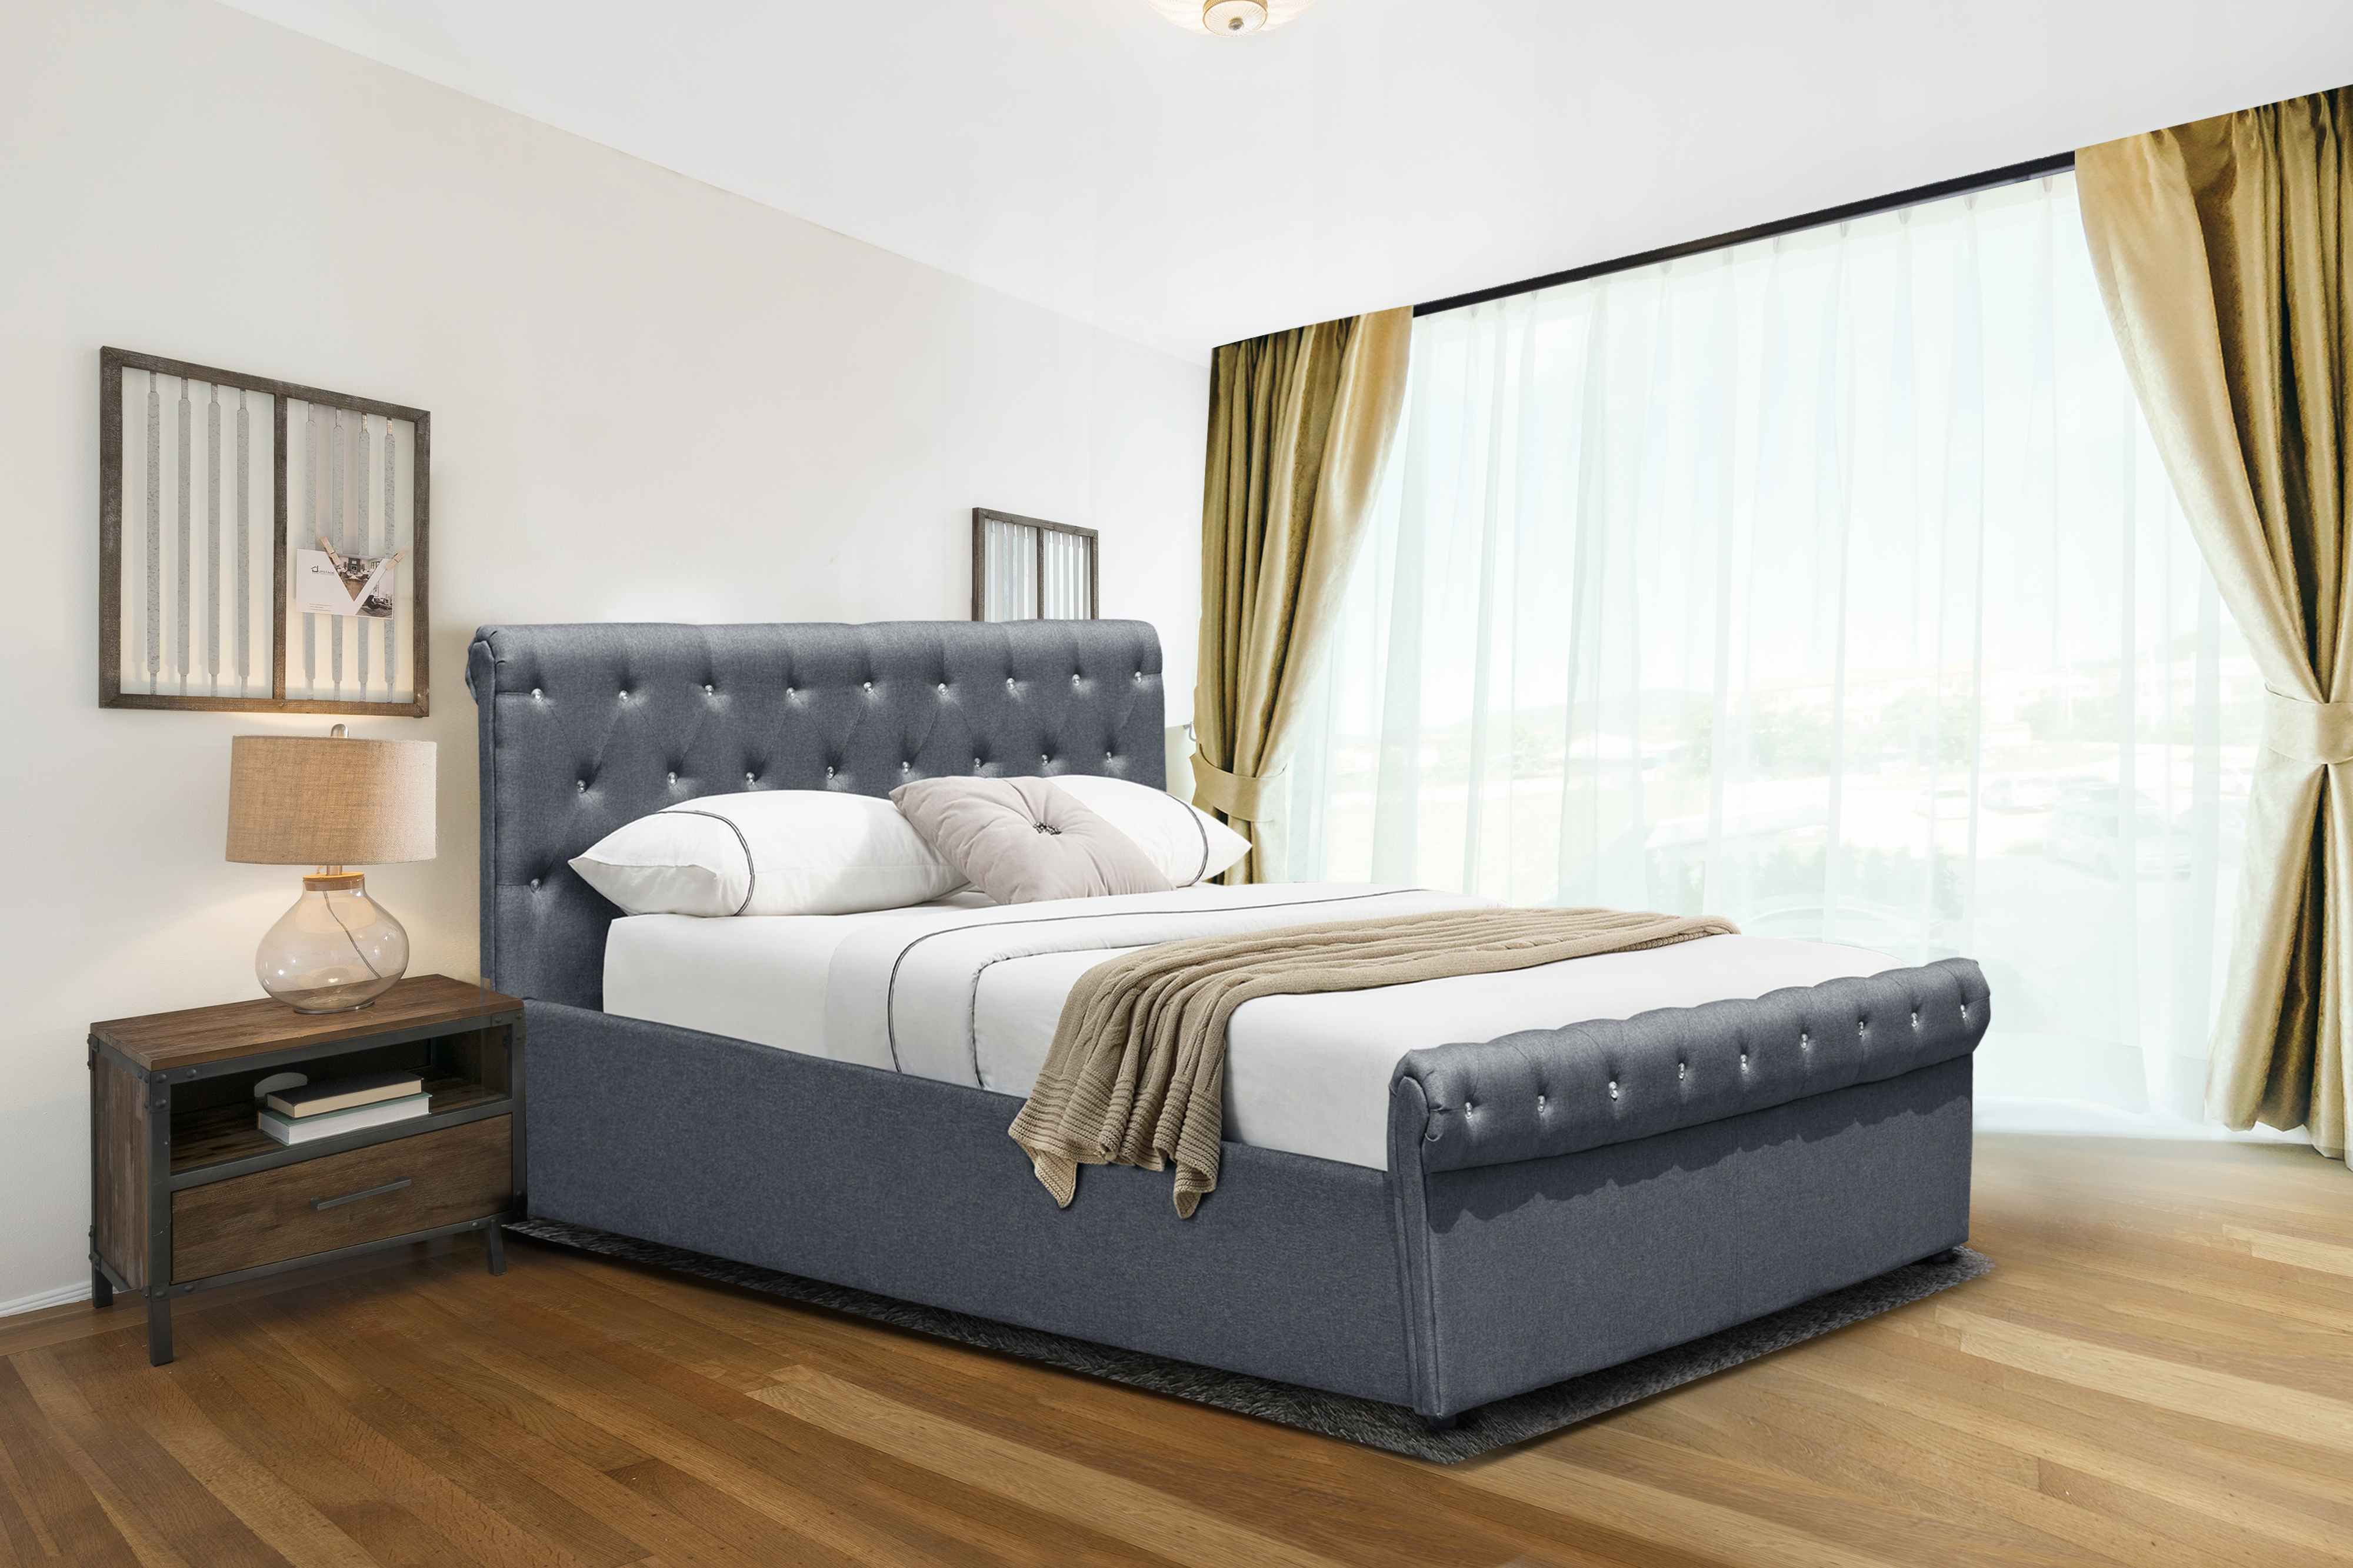 ottoman bed and mattress set